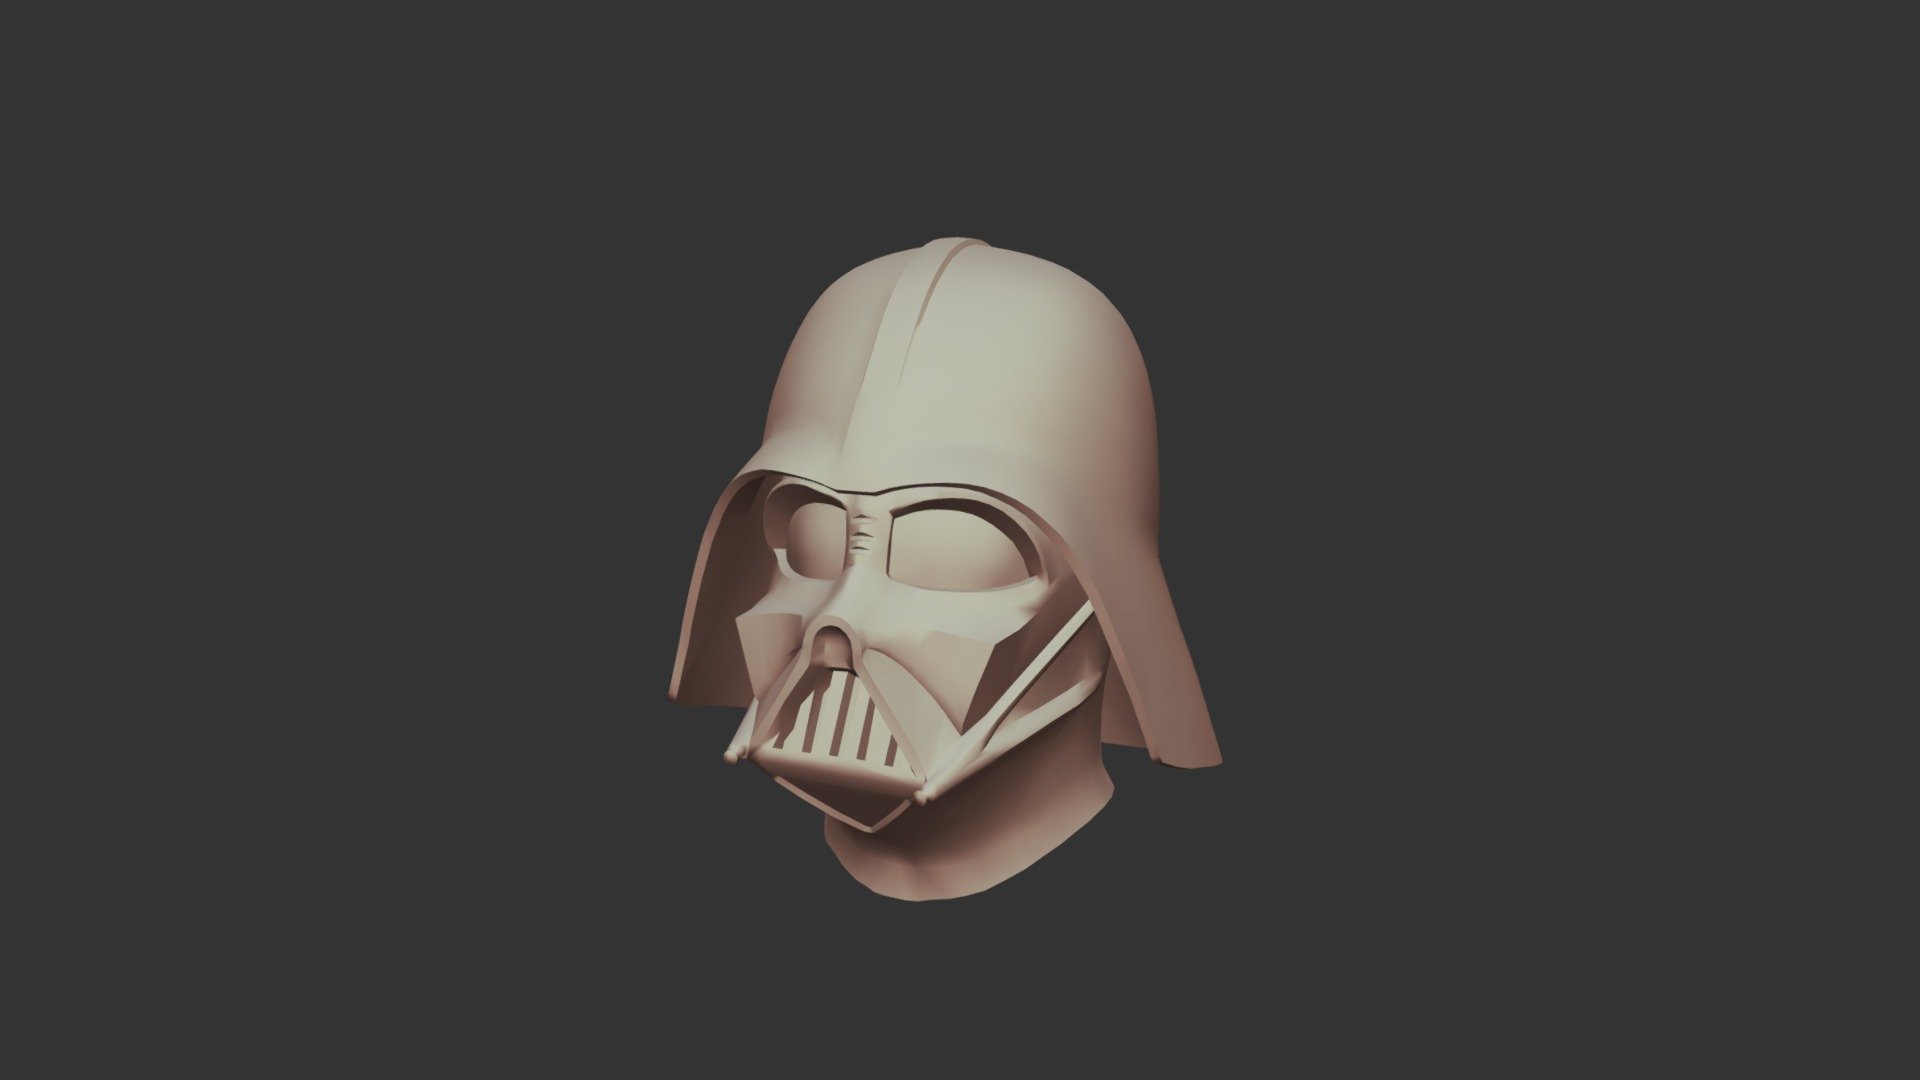 Darth Vader Helmet - Re-shaped To Original